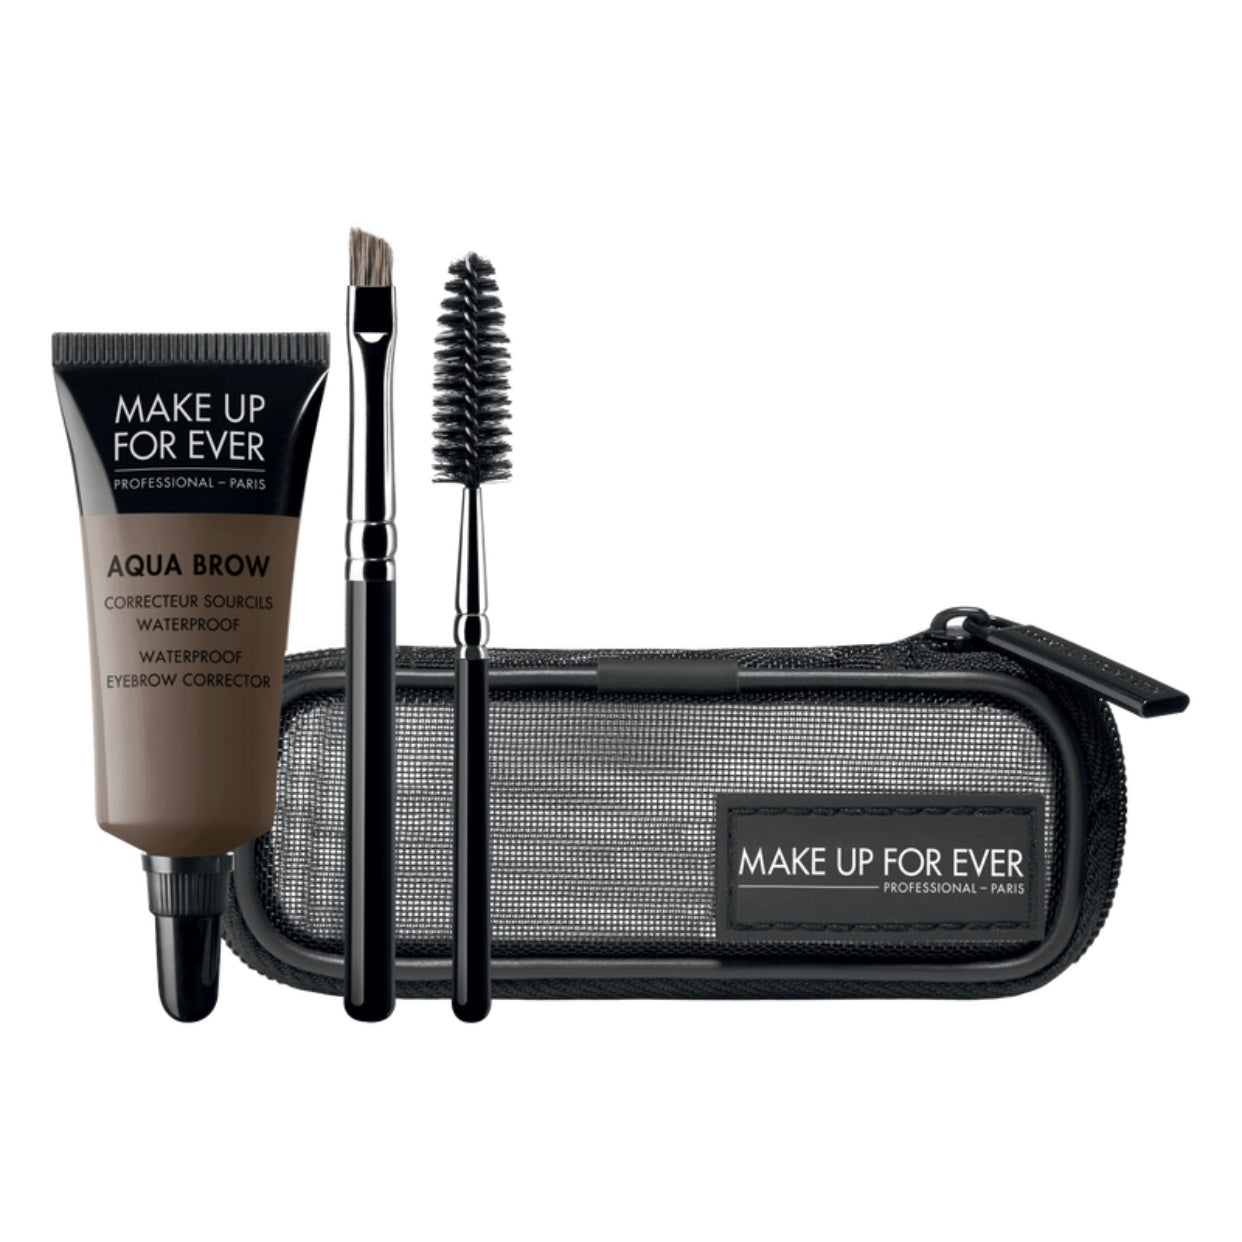 MAKE UP FOR Aqua Brow Kit Waterproof Eyebrow Corrector – Beautique